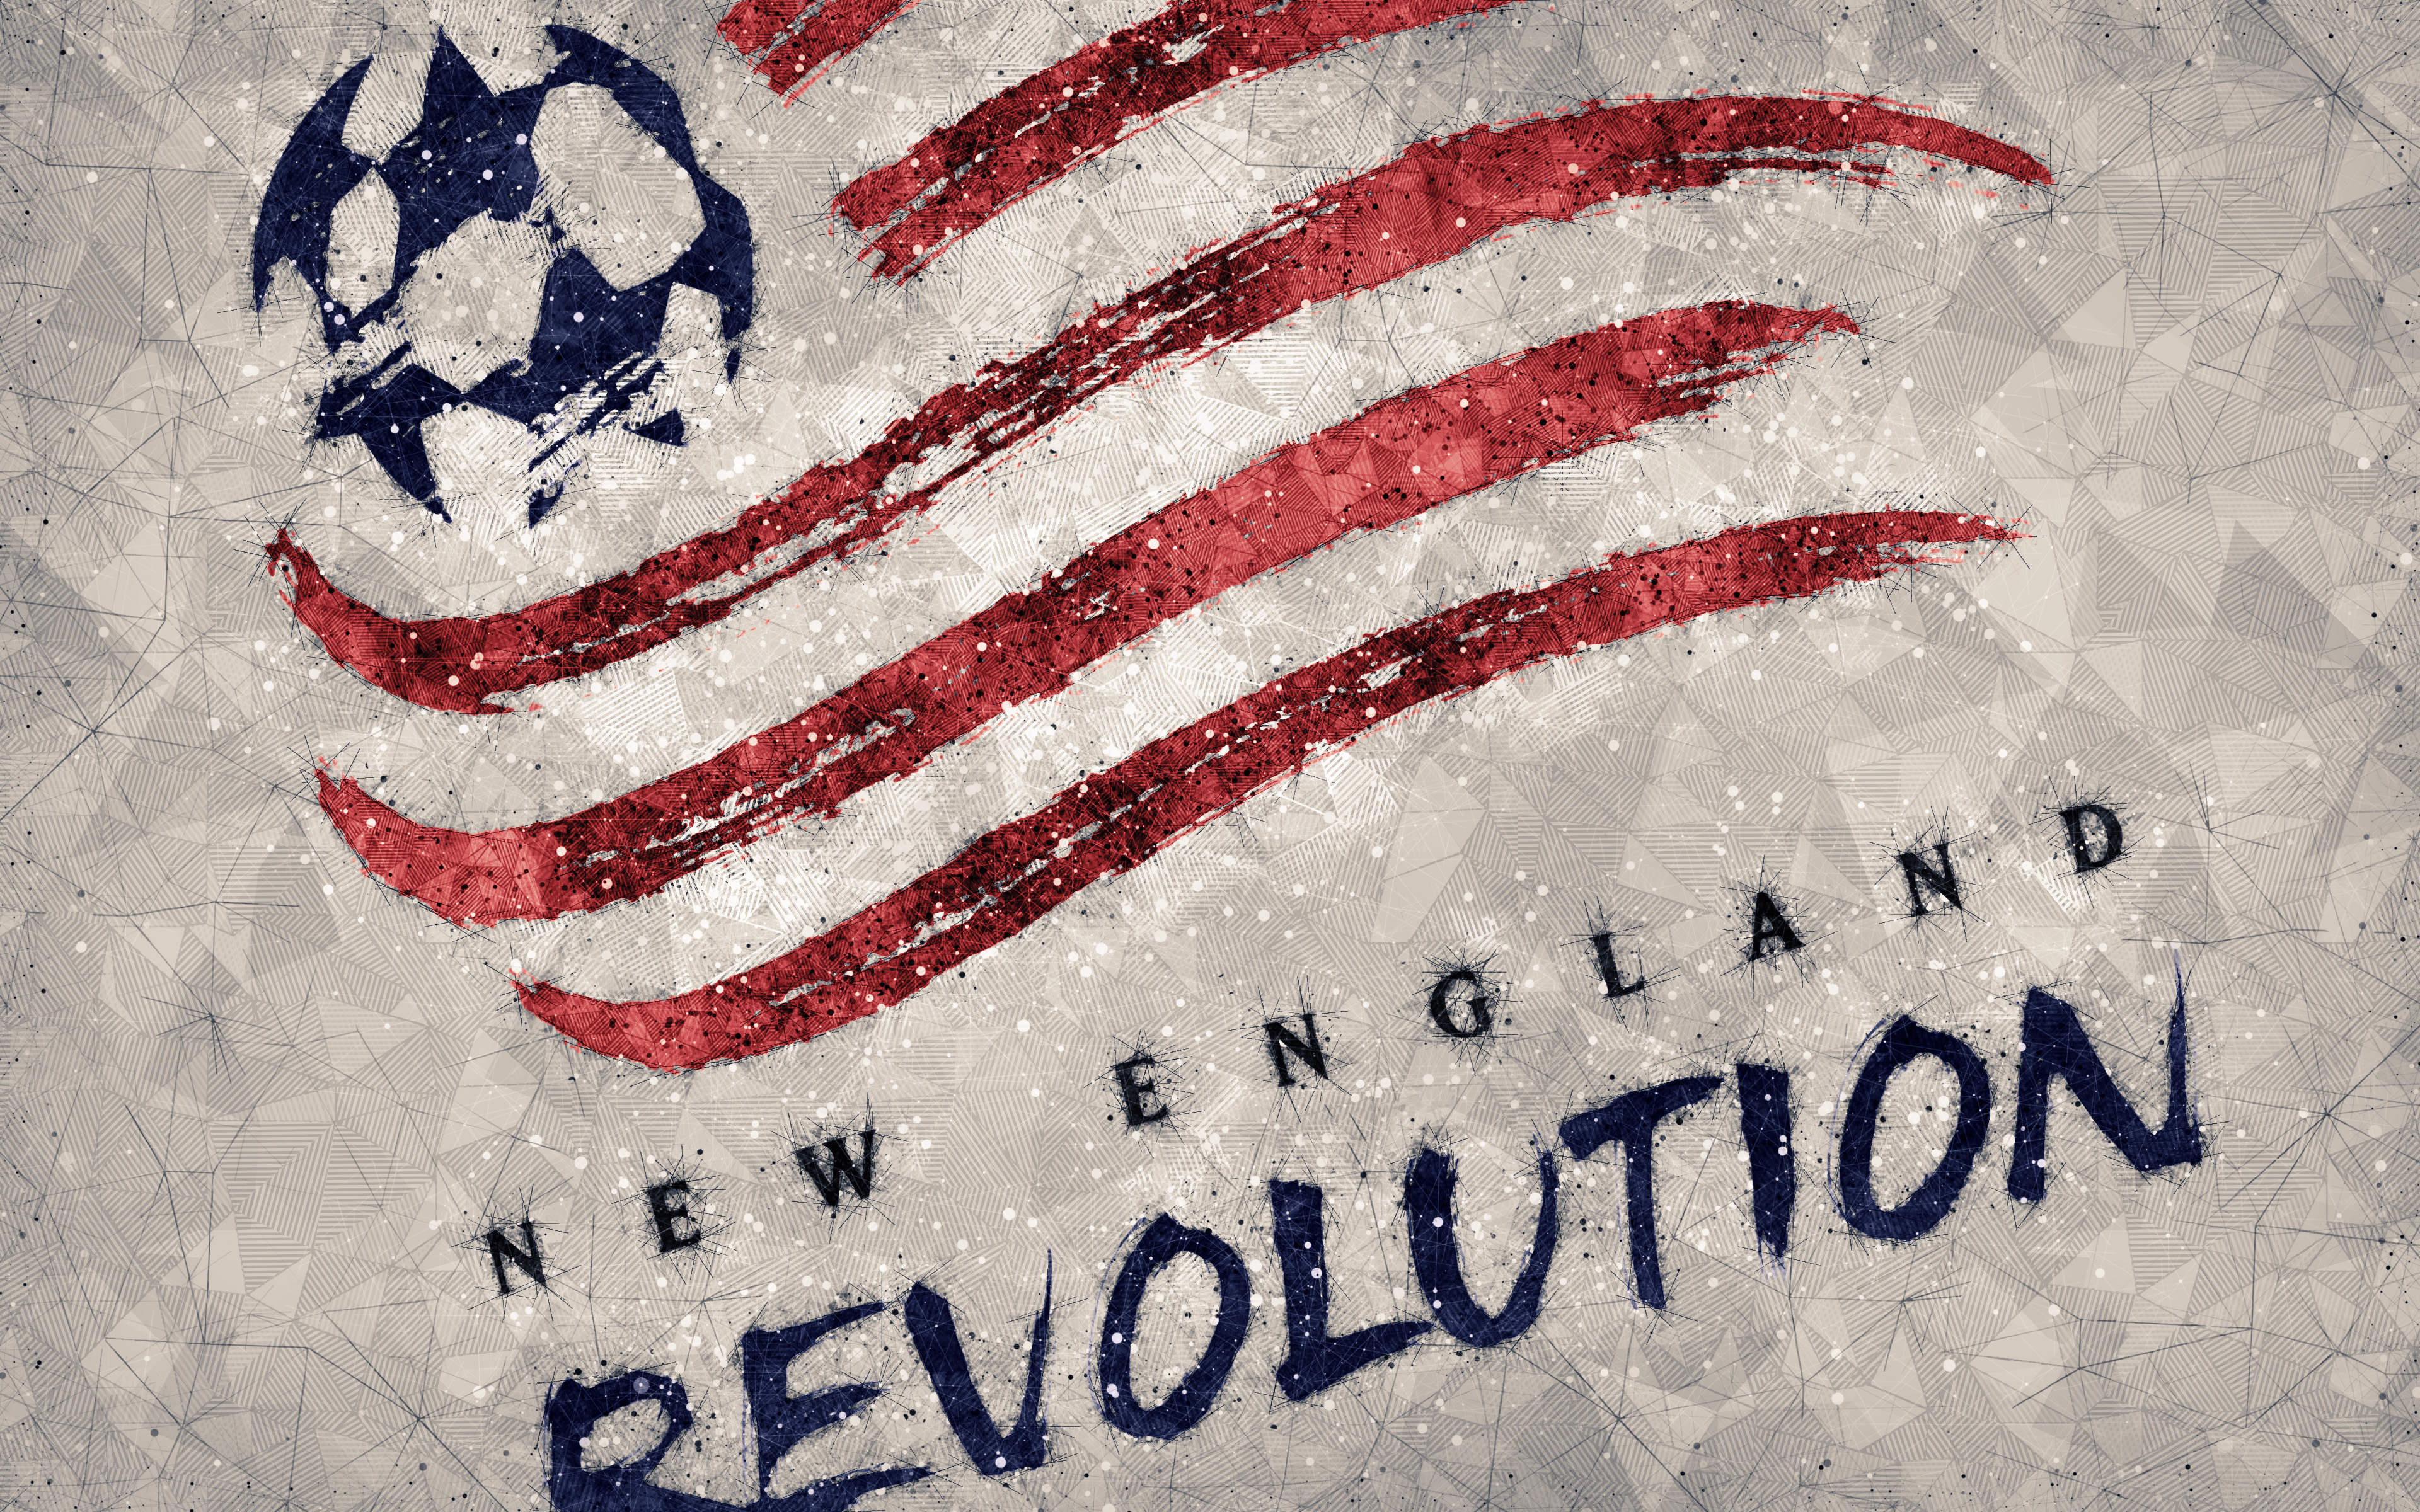 100+] New England Revolution Wallpapers